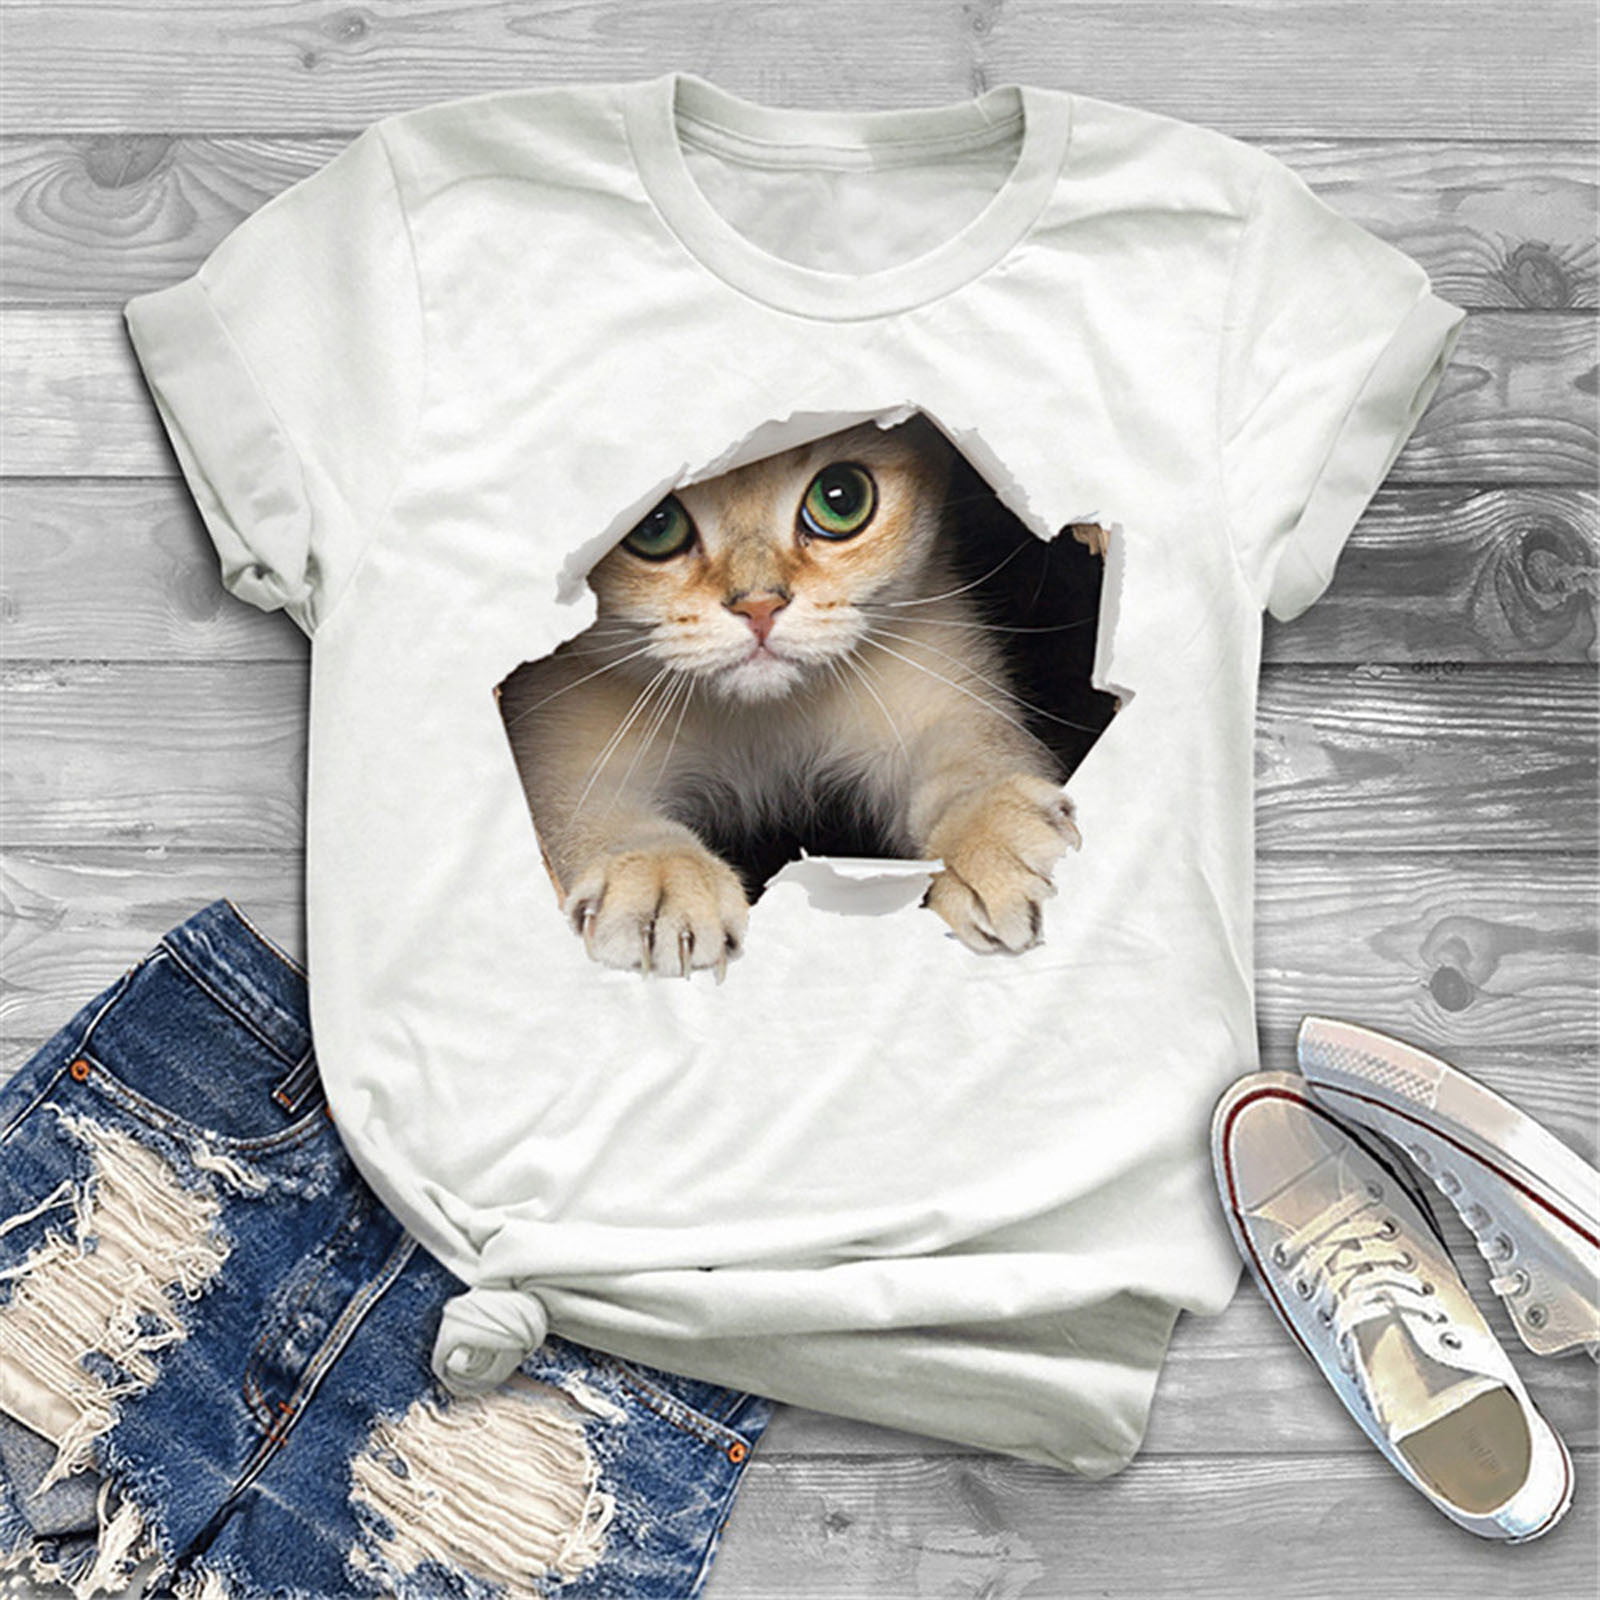 WGOUP Womens Tops Fashion Women Short Sleeveless 3D Cat Print Casual shirts Blouse White XXXXL - Walmart.com